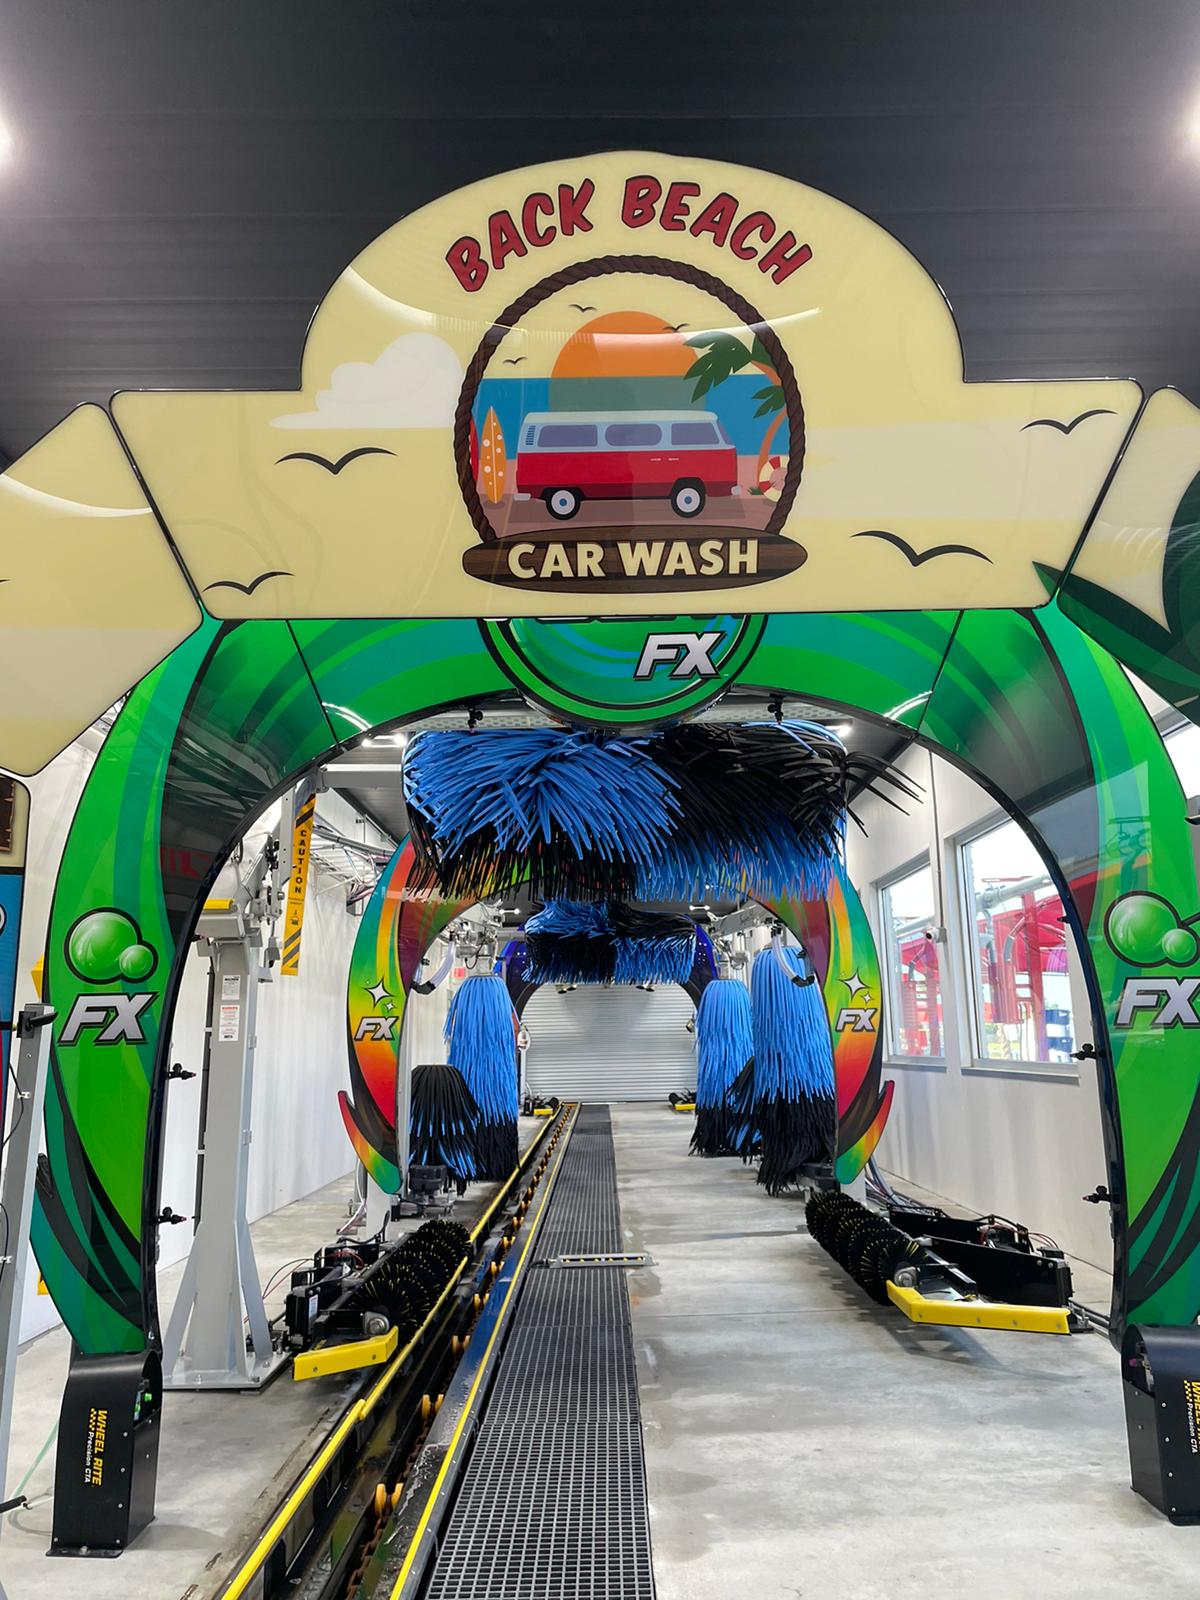 Back Beach Car Wash